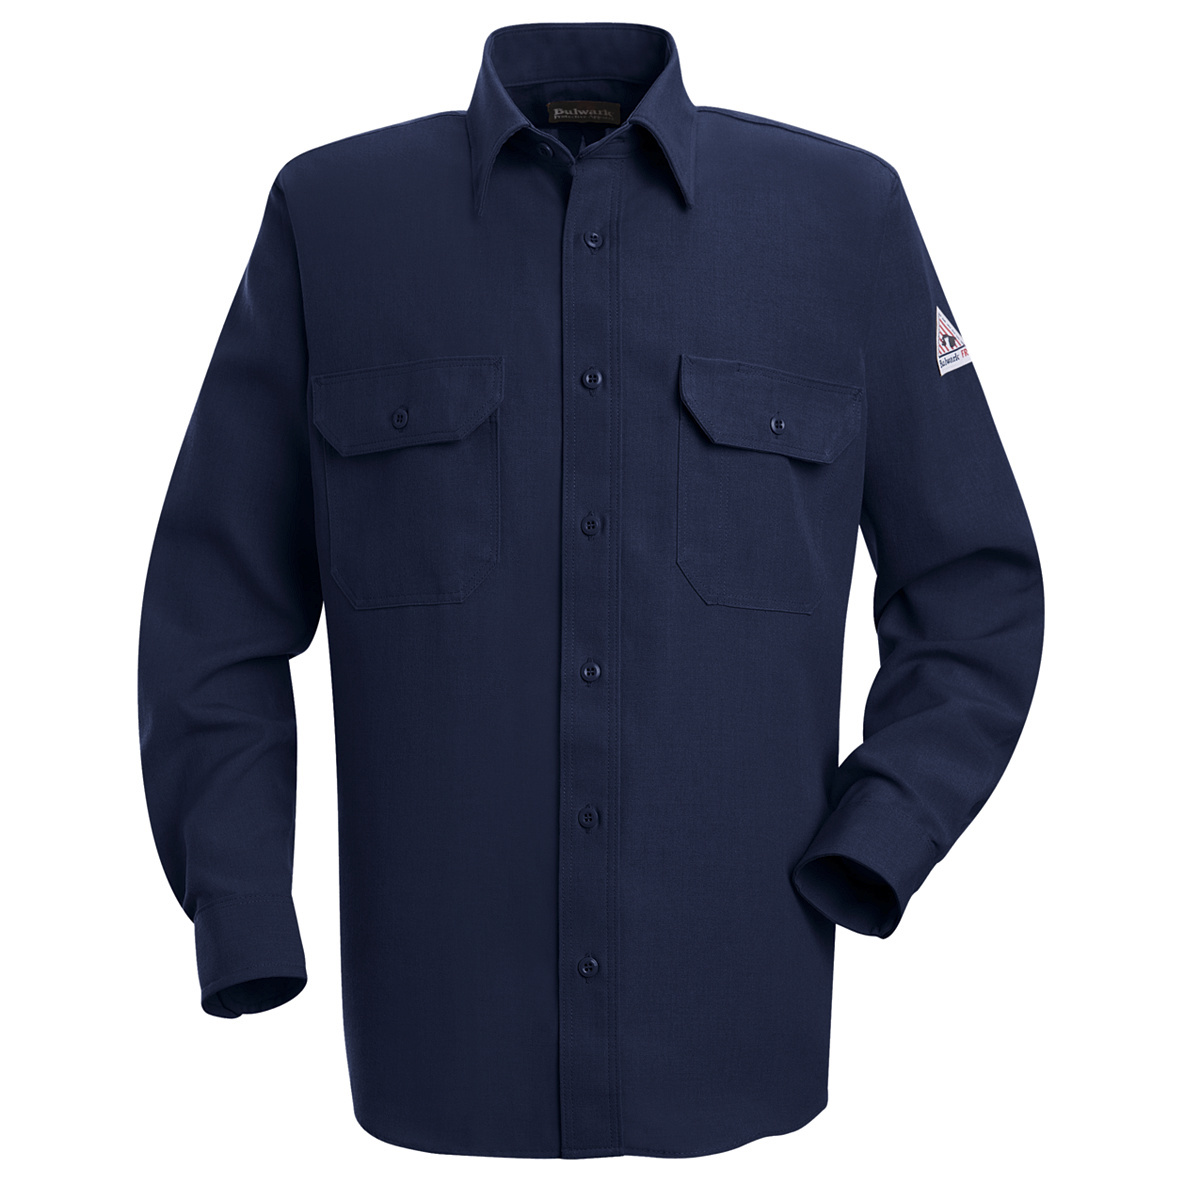 Bulwark® 2X Regular Navy Blue Nomex® IIIA/Nomex® Aramid/Kevlar® Aramid Flame Resistant Uniform Shirt With Button Front Closure